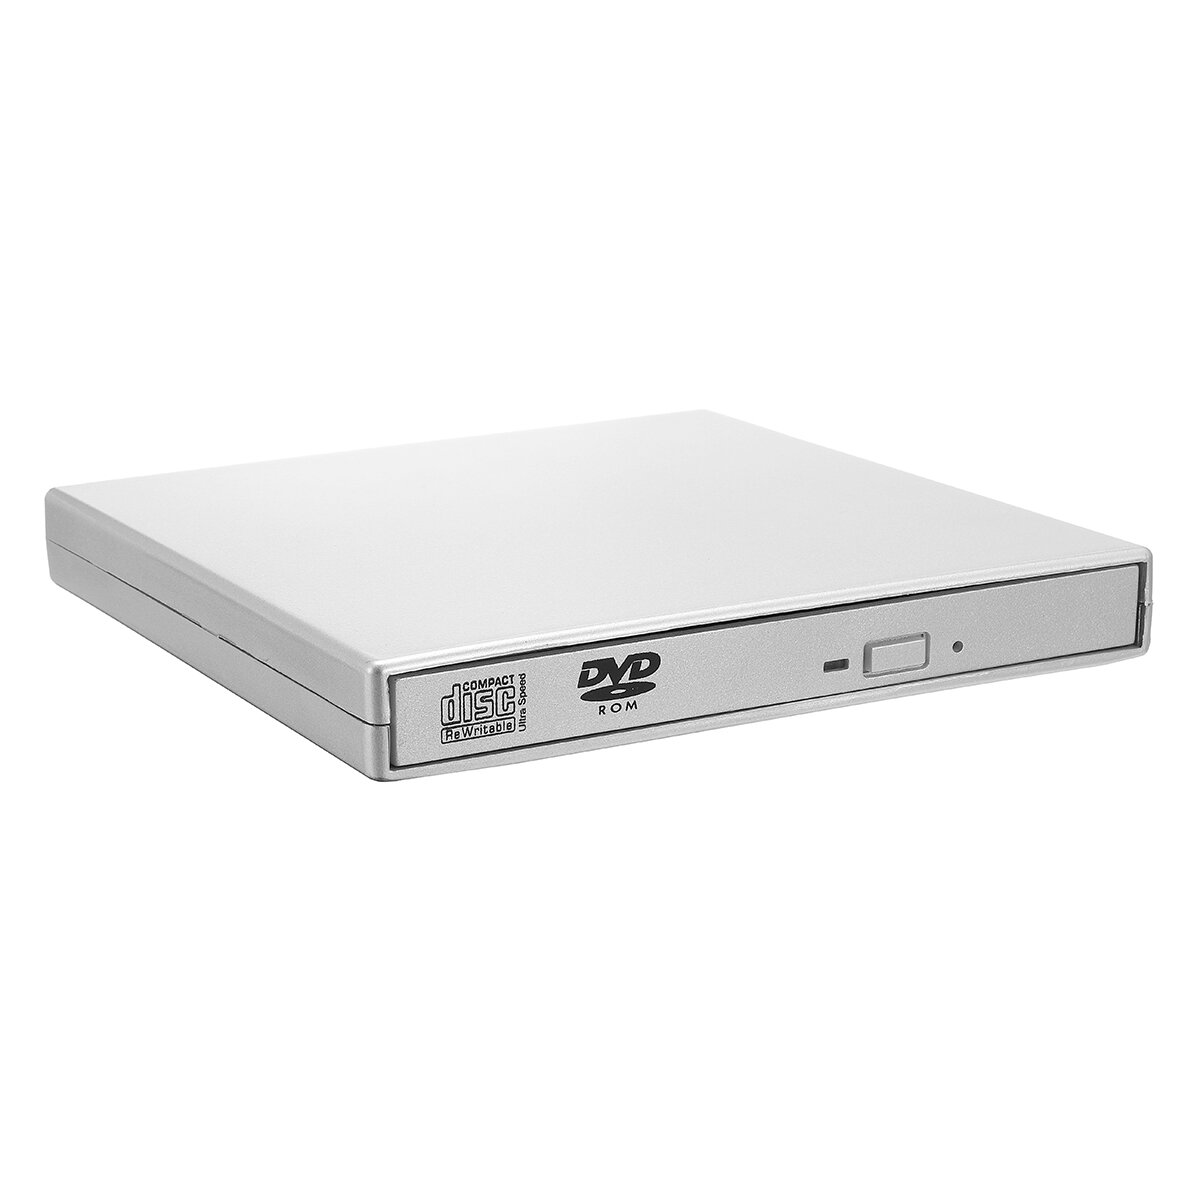 USB 2.0外部CDバーナーCD / DVDプレーヤー光学ドライブ（PC用）